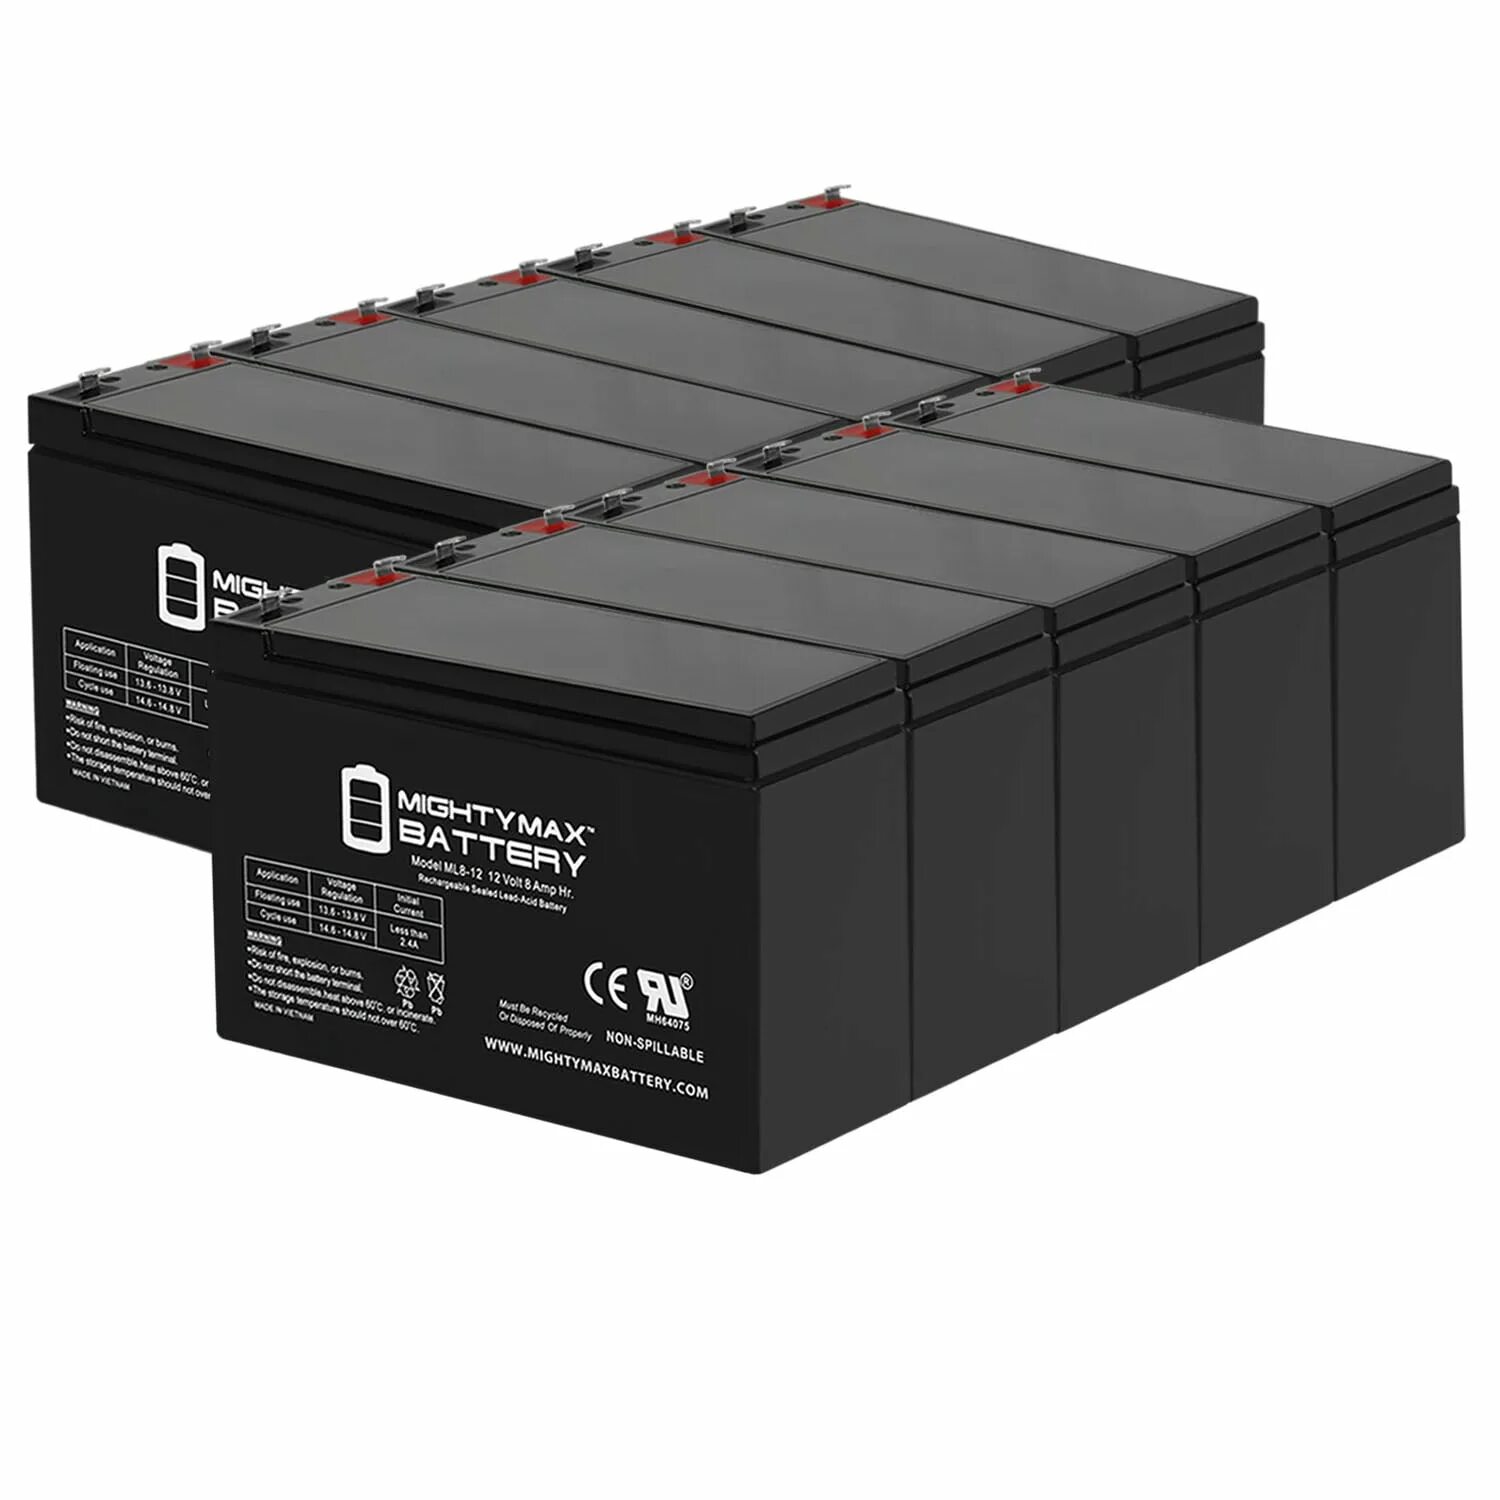 B b battery 12 12. Ml8-12 12v8ah. Sh1228w аккумулятор для ИБП. Sh1228w аккумулятор 12v28pc. Аккумулятор BB Battery sh1228w.